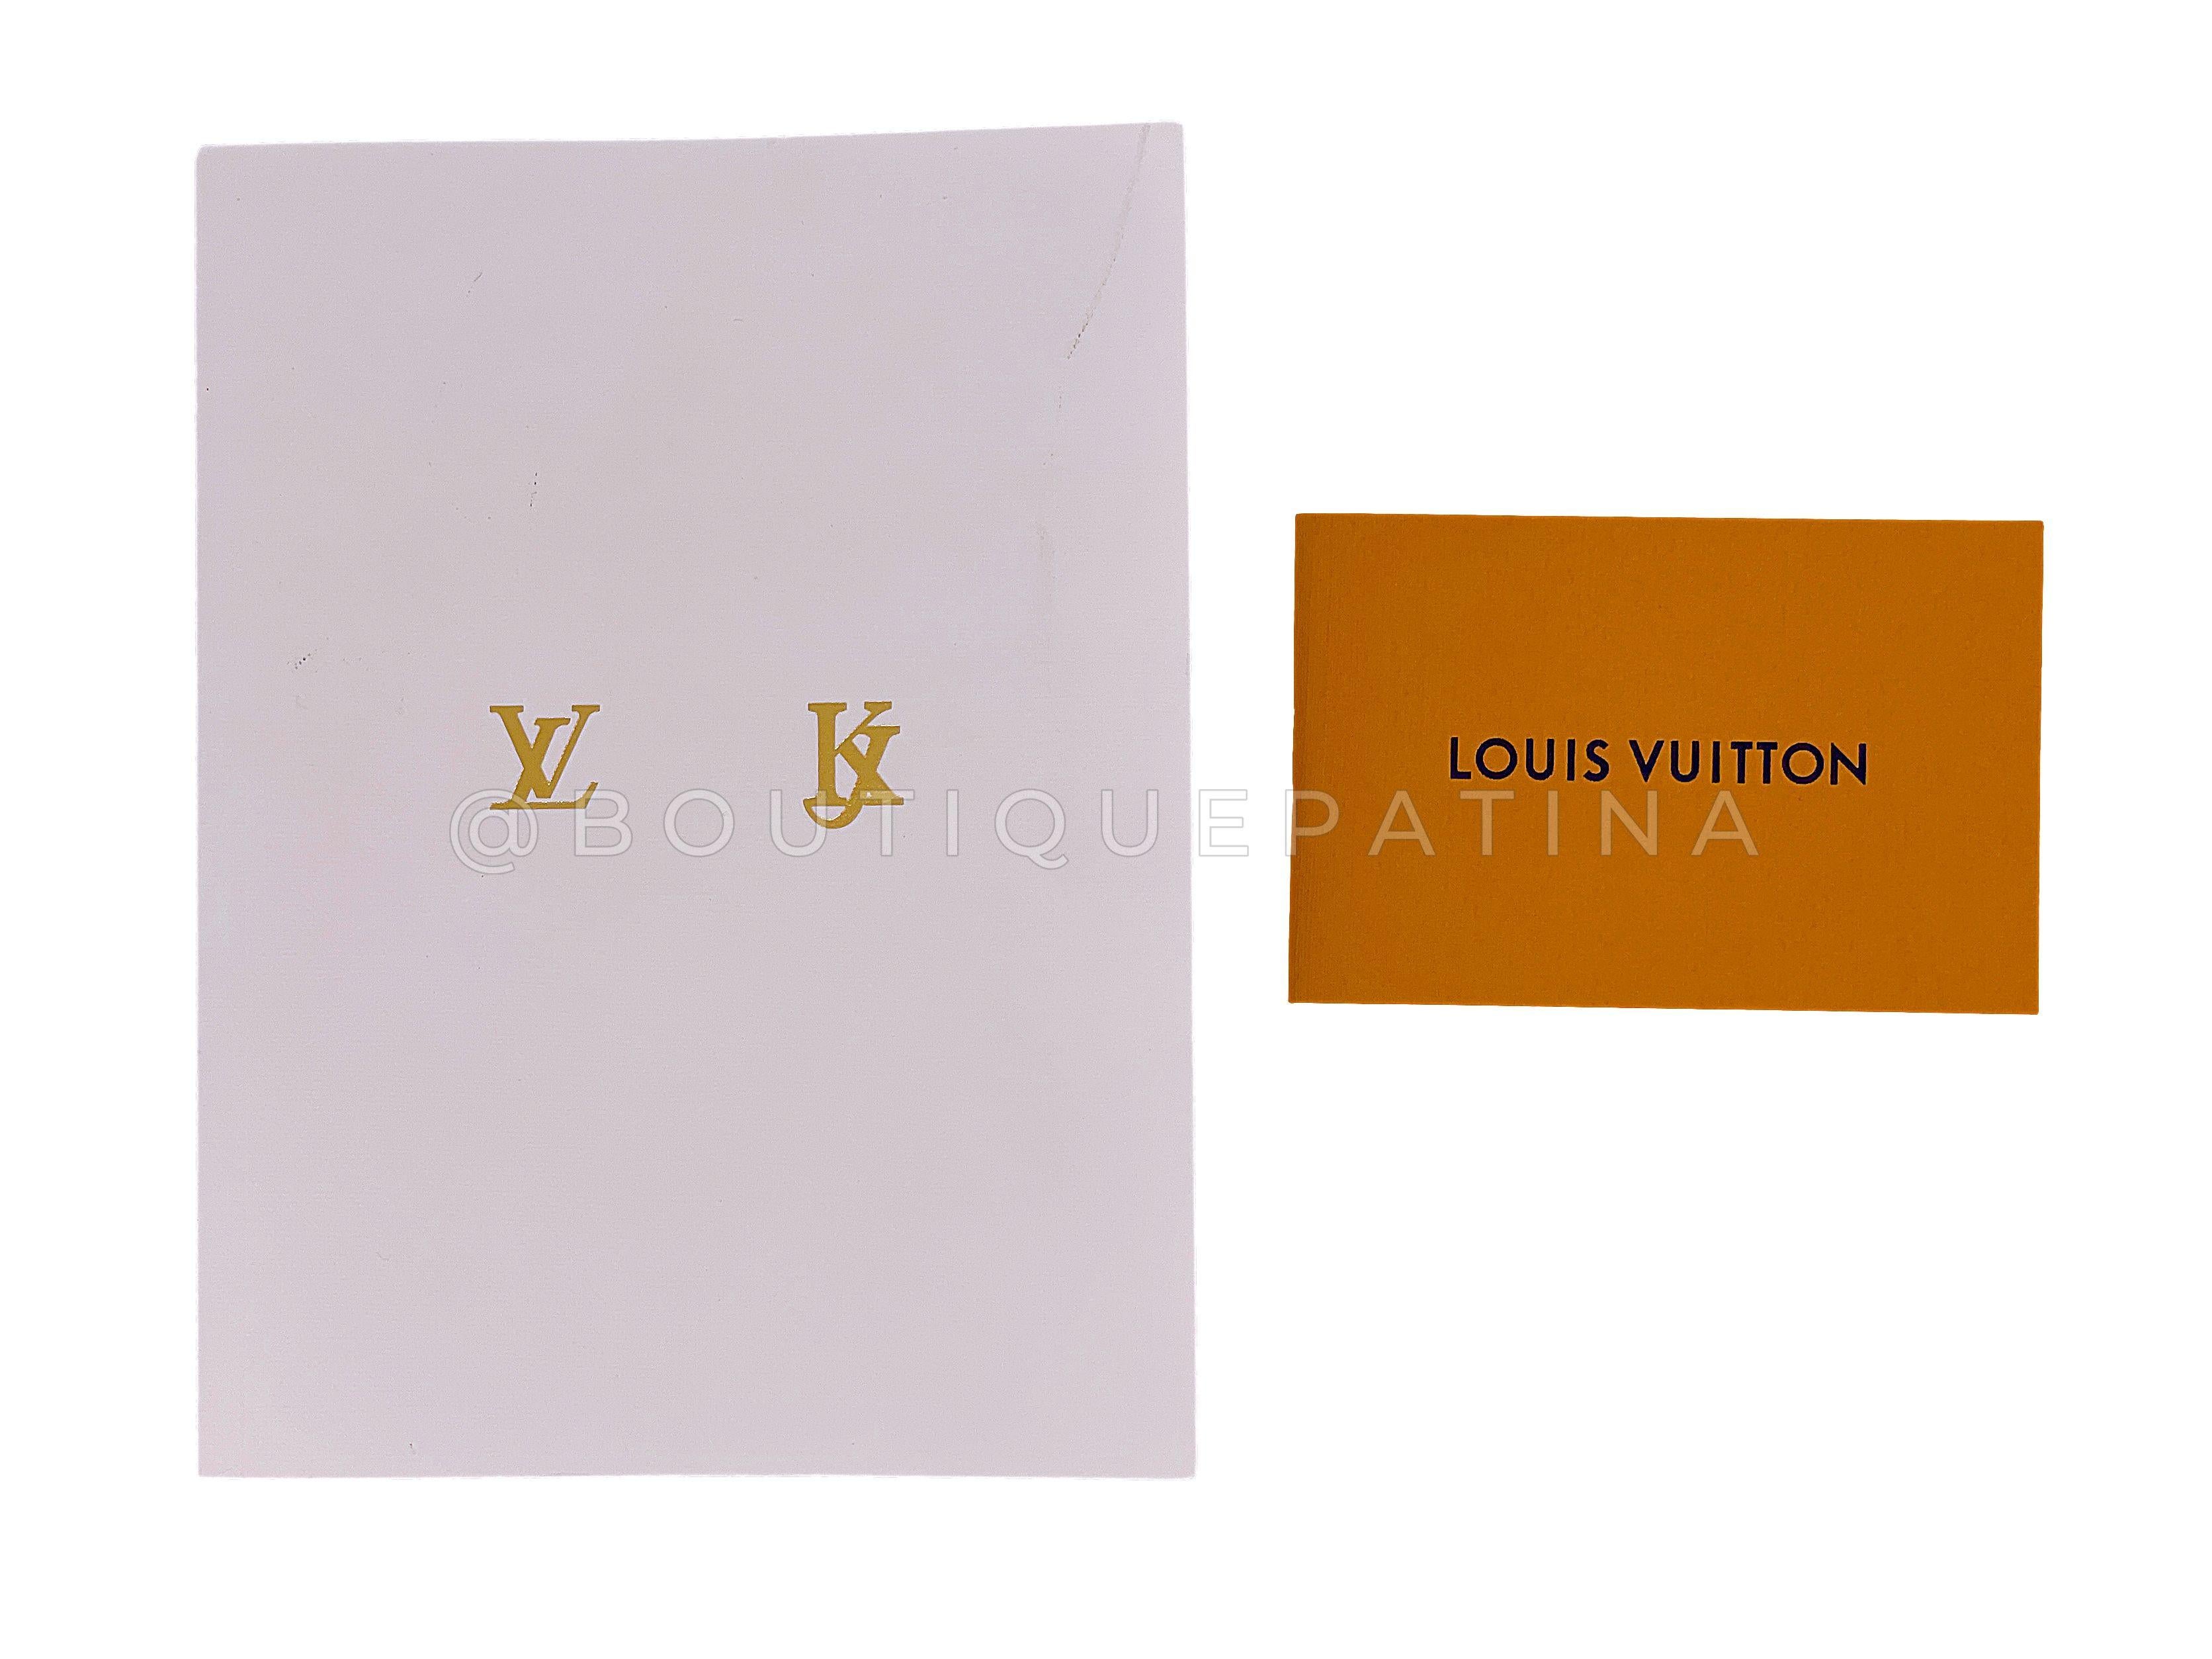 Louis Vuitton x Jeff Koons Rubens 